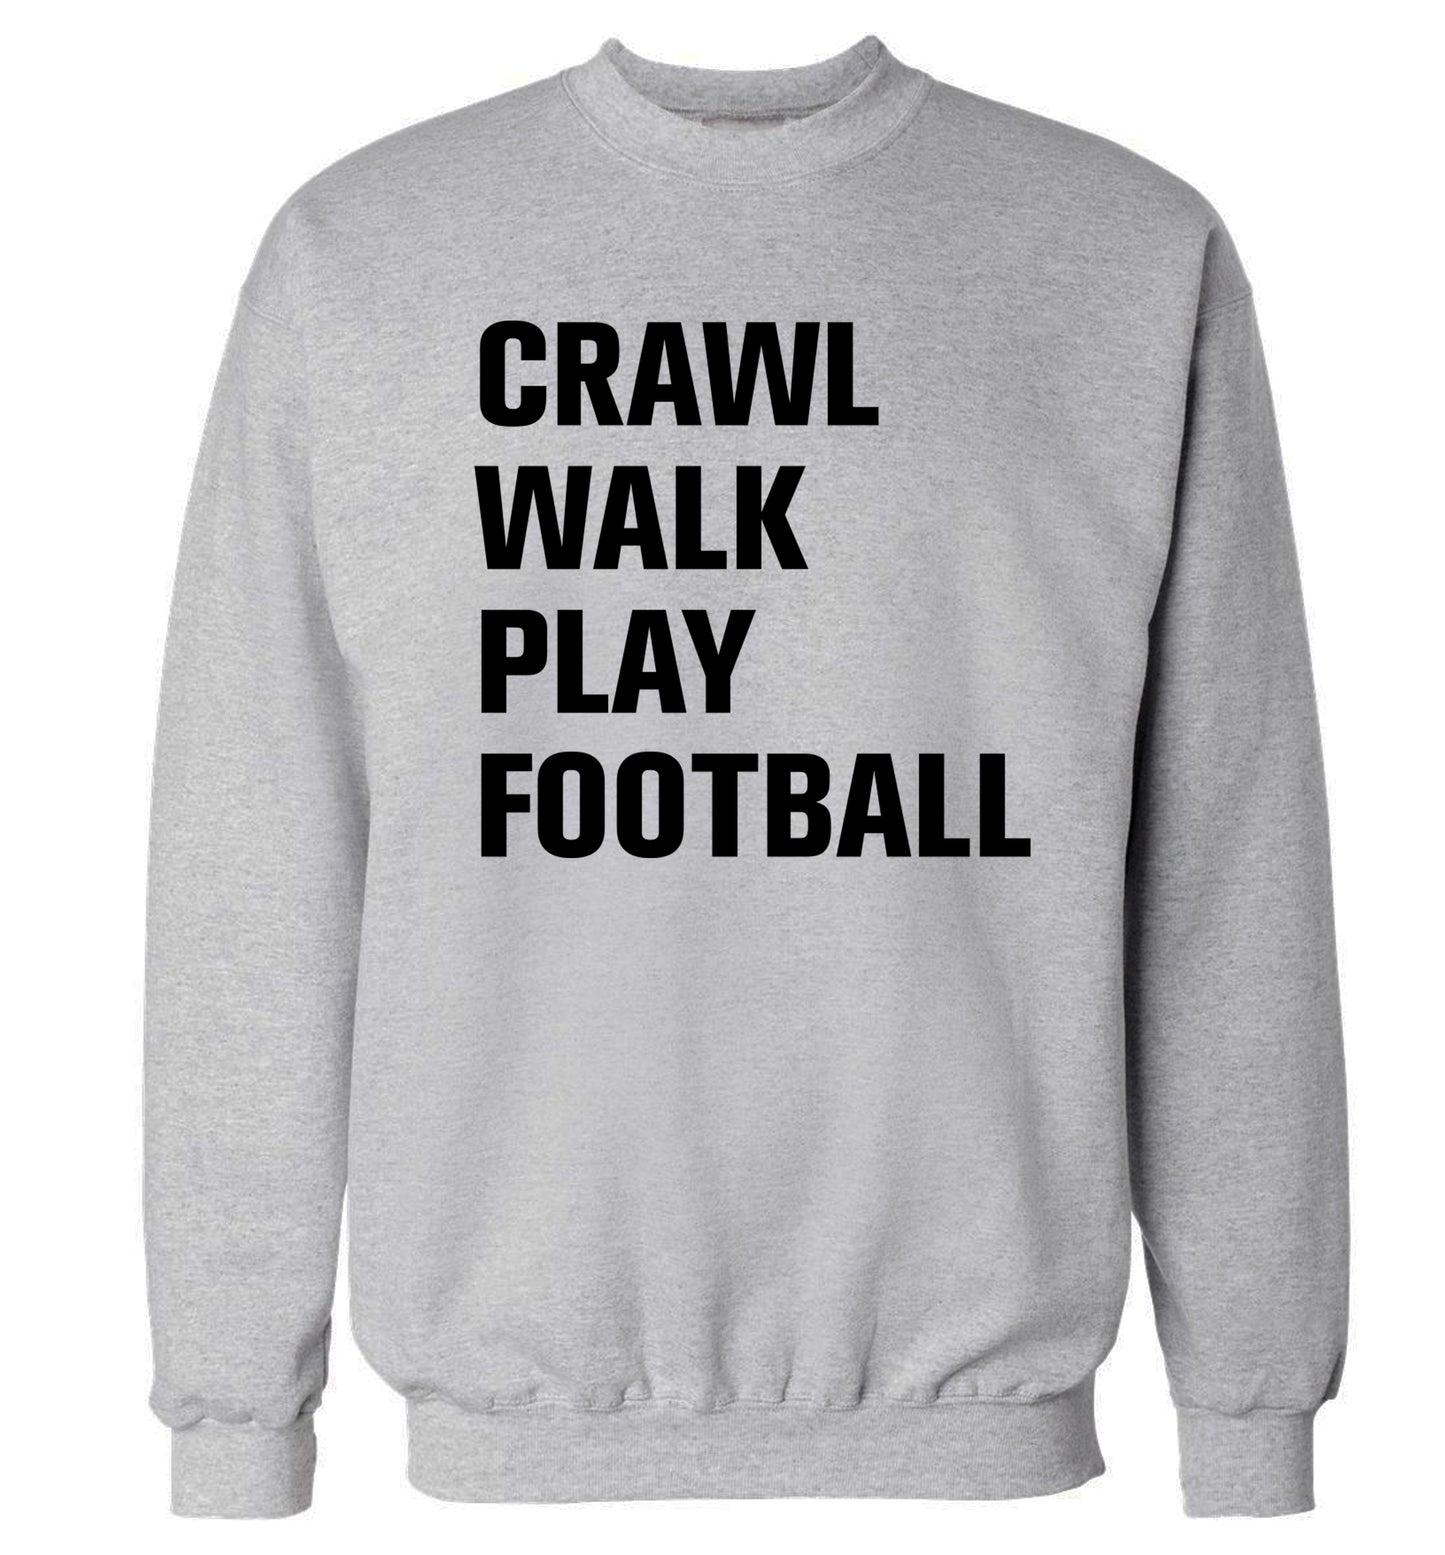 Crawl, walk, play football Adult's unisex grey Sweater 2XL